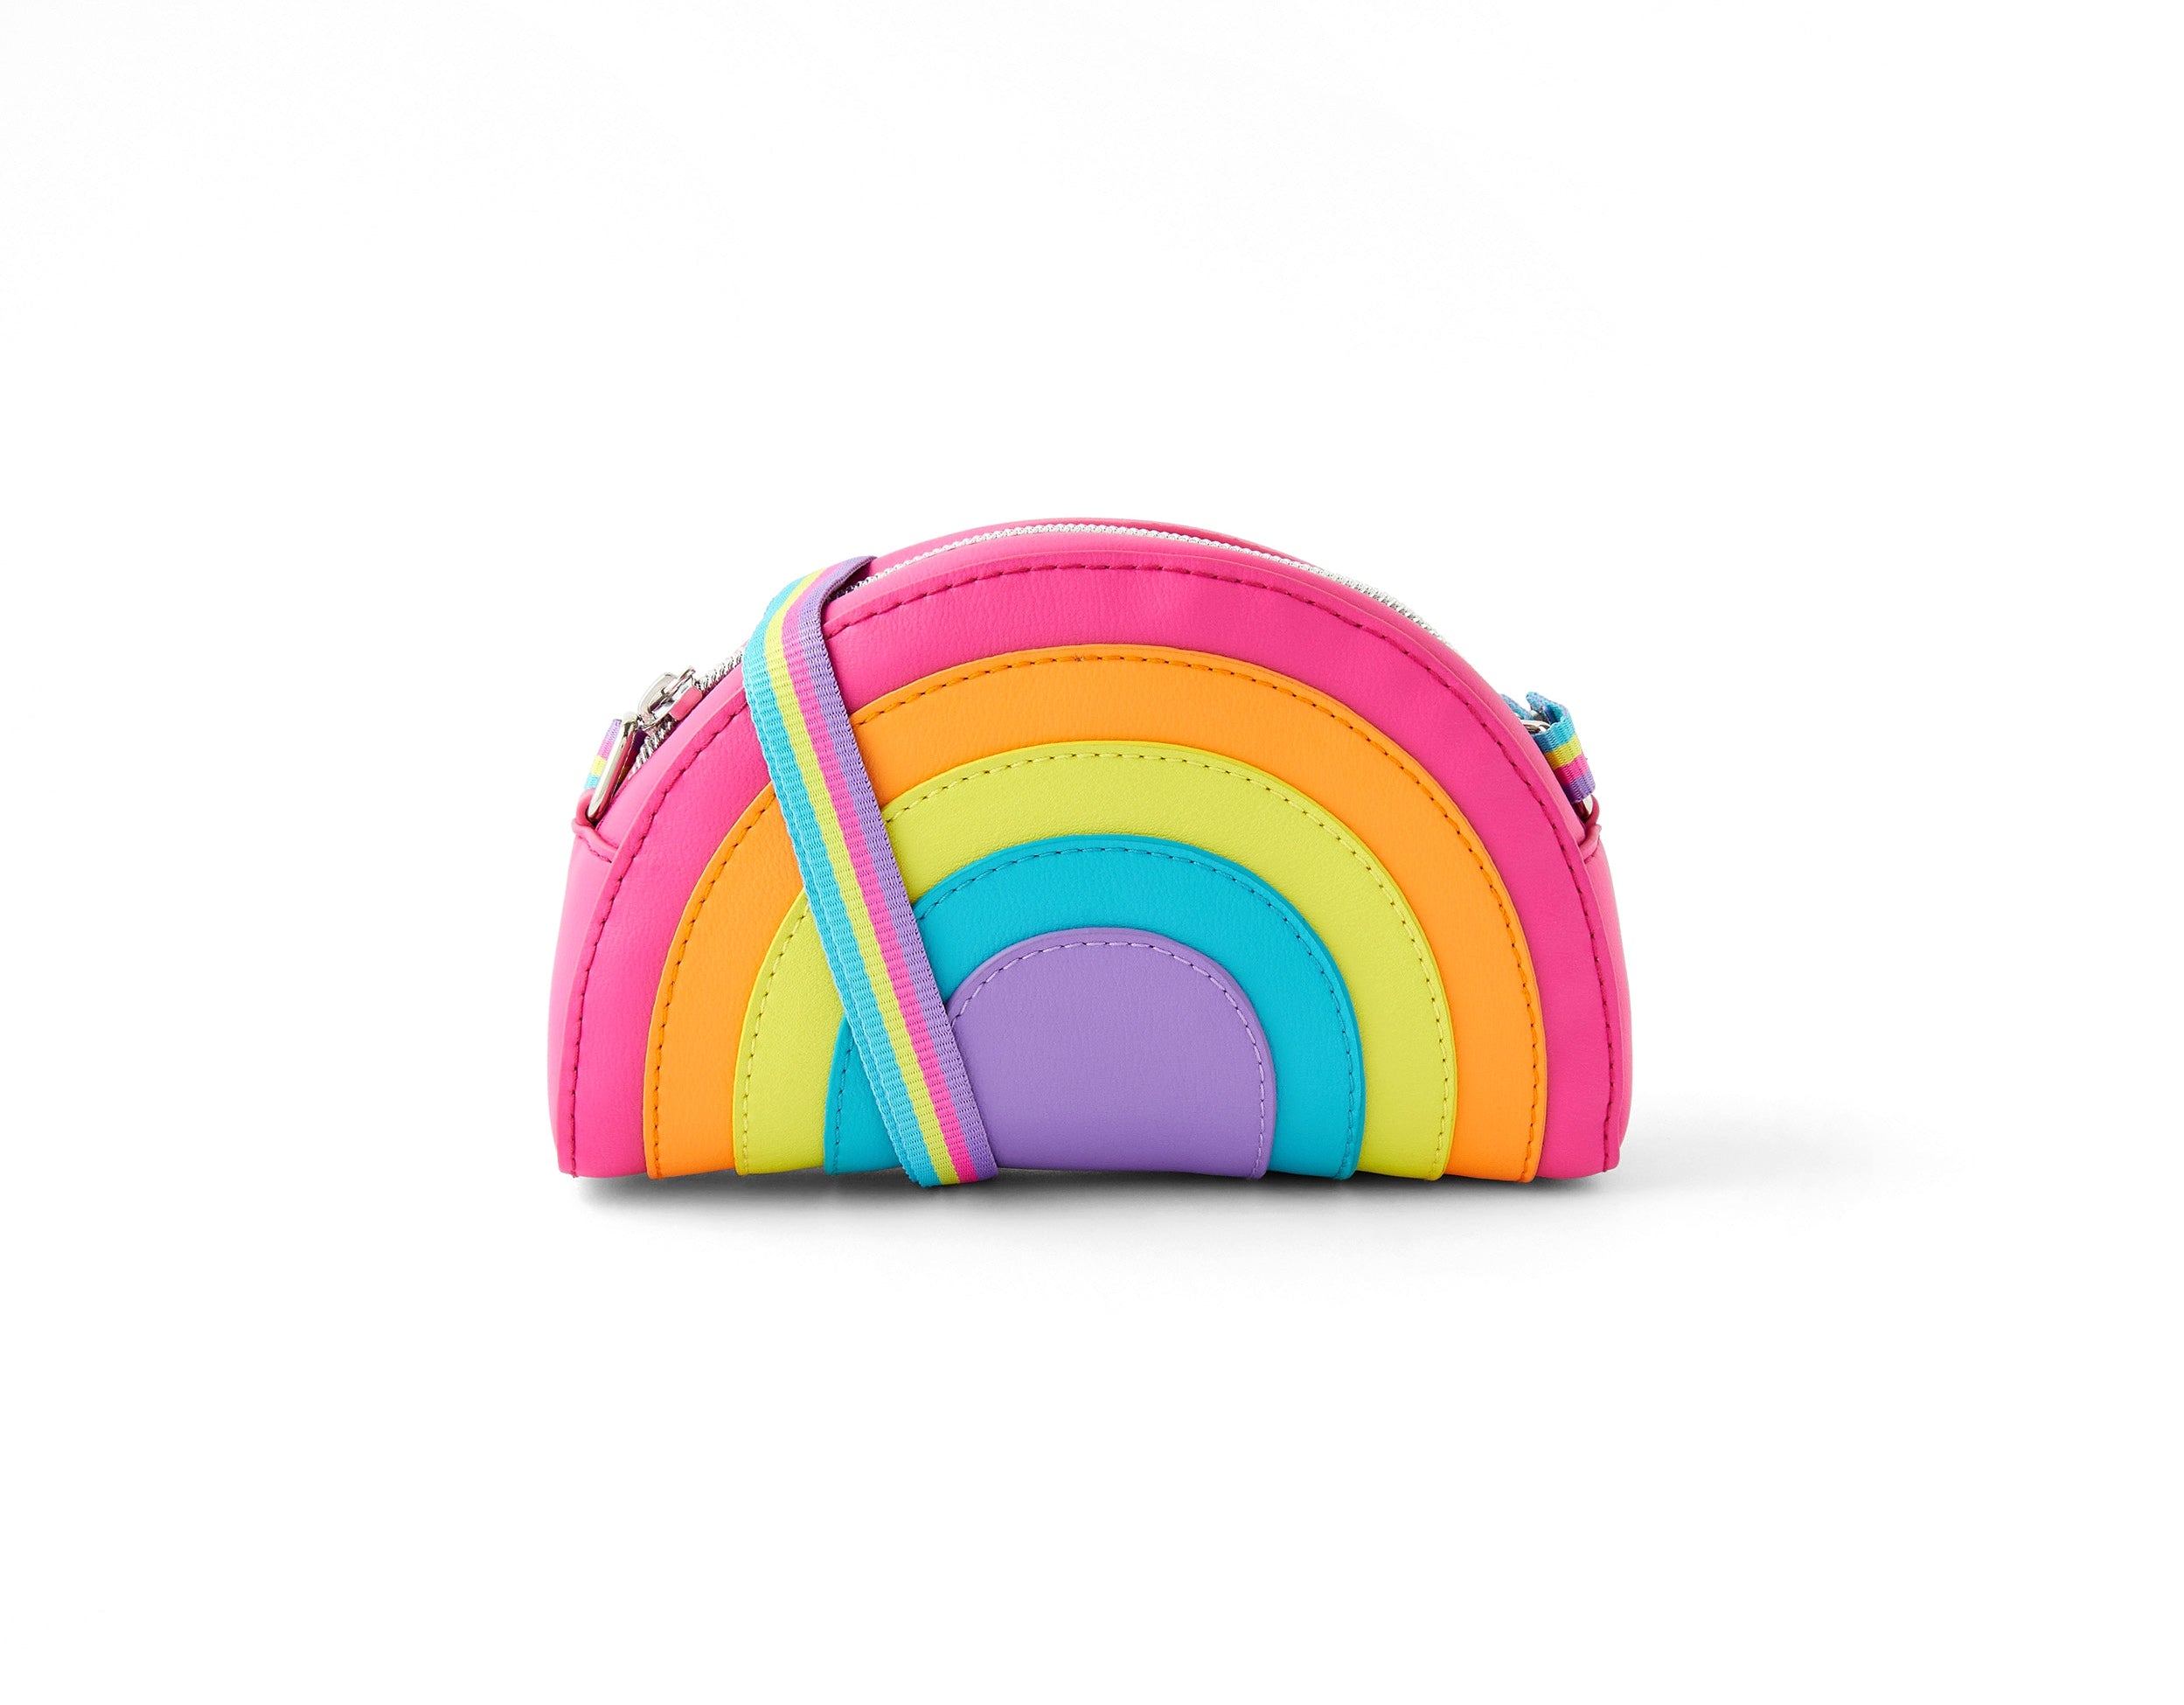 Accessorize London Rainbow Across Body Bag